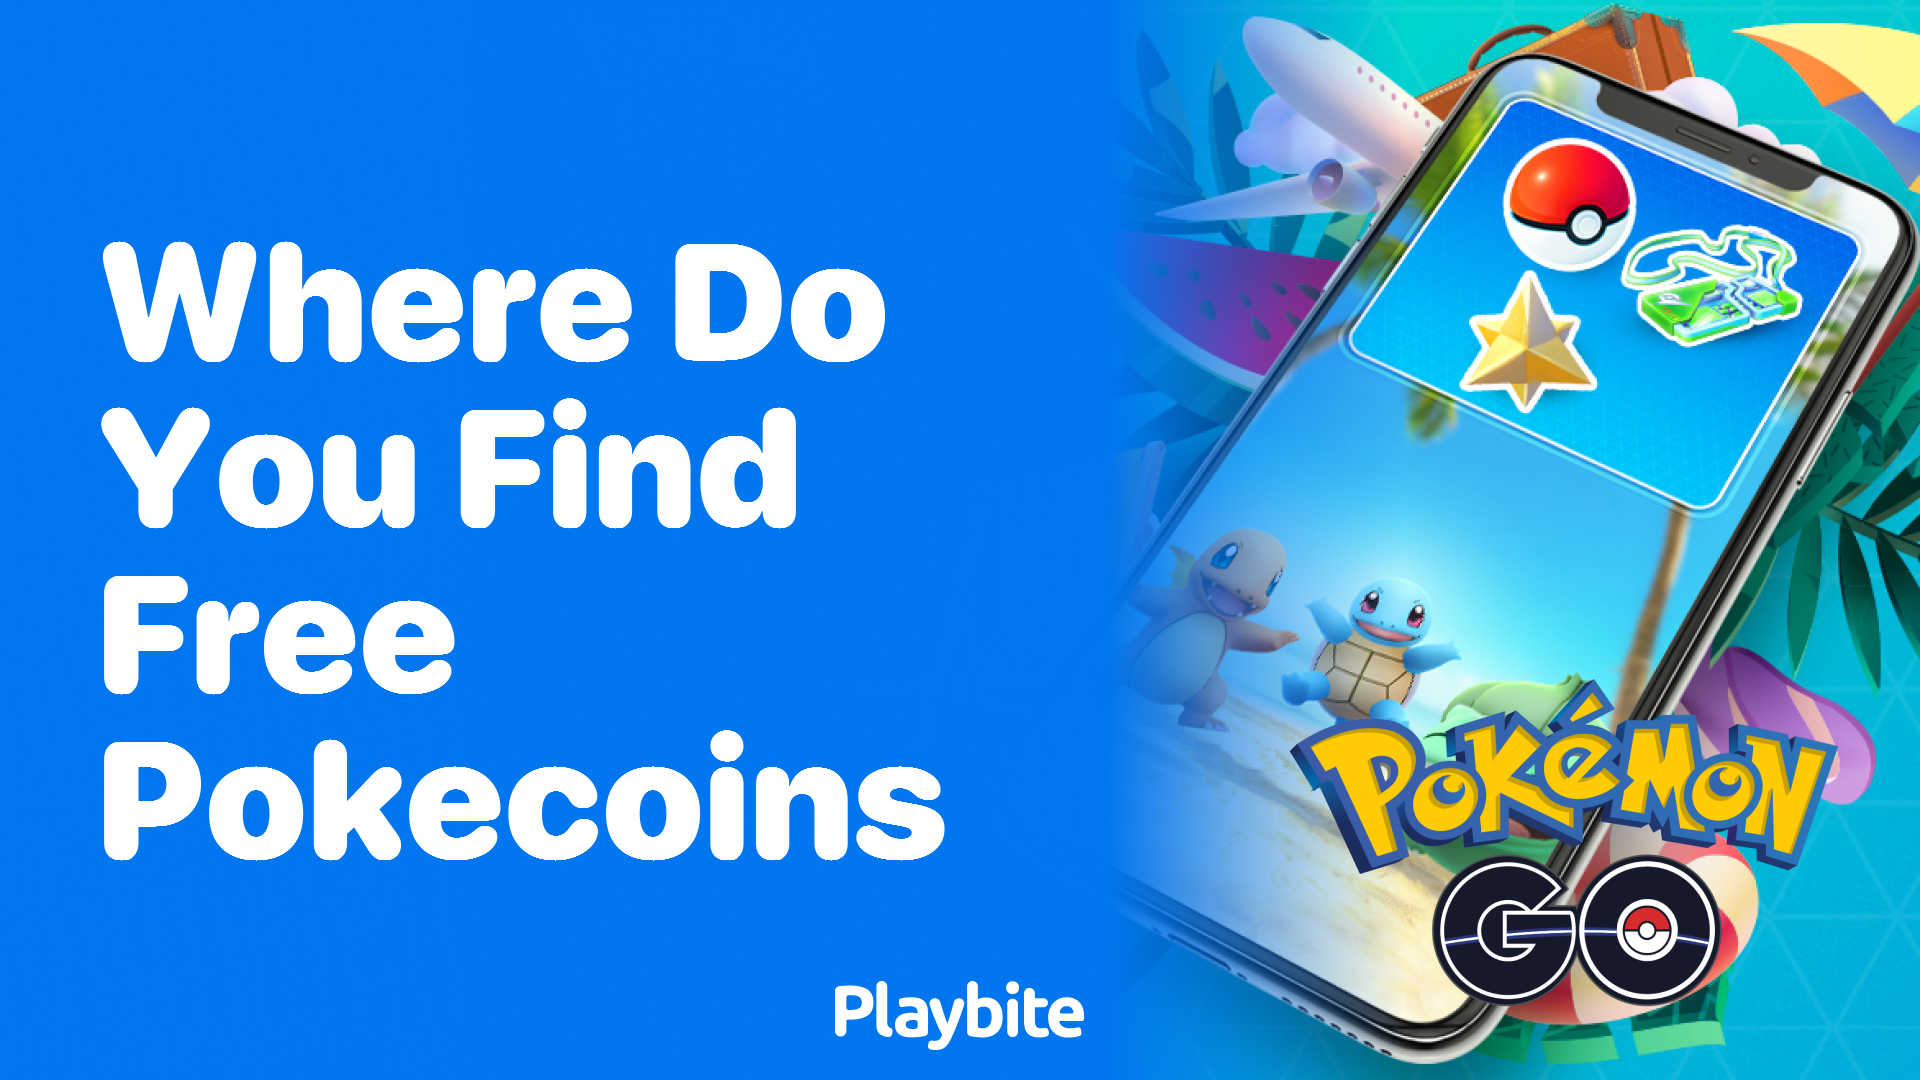 Where Do You Find Free PokeCoins in Pokémon GO?